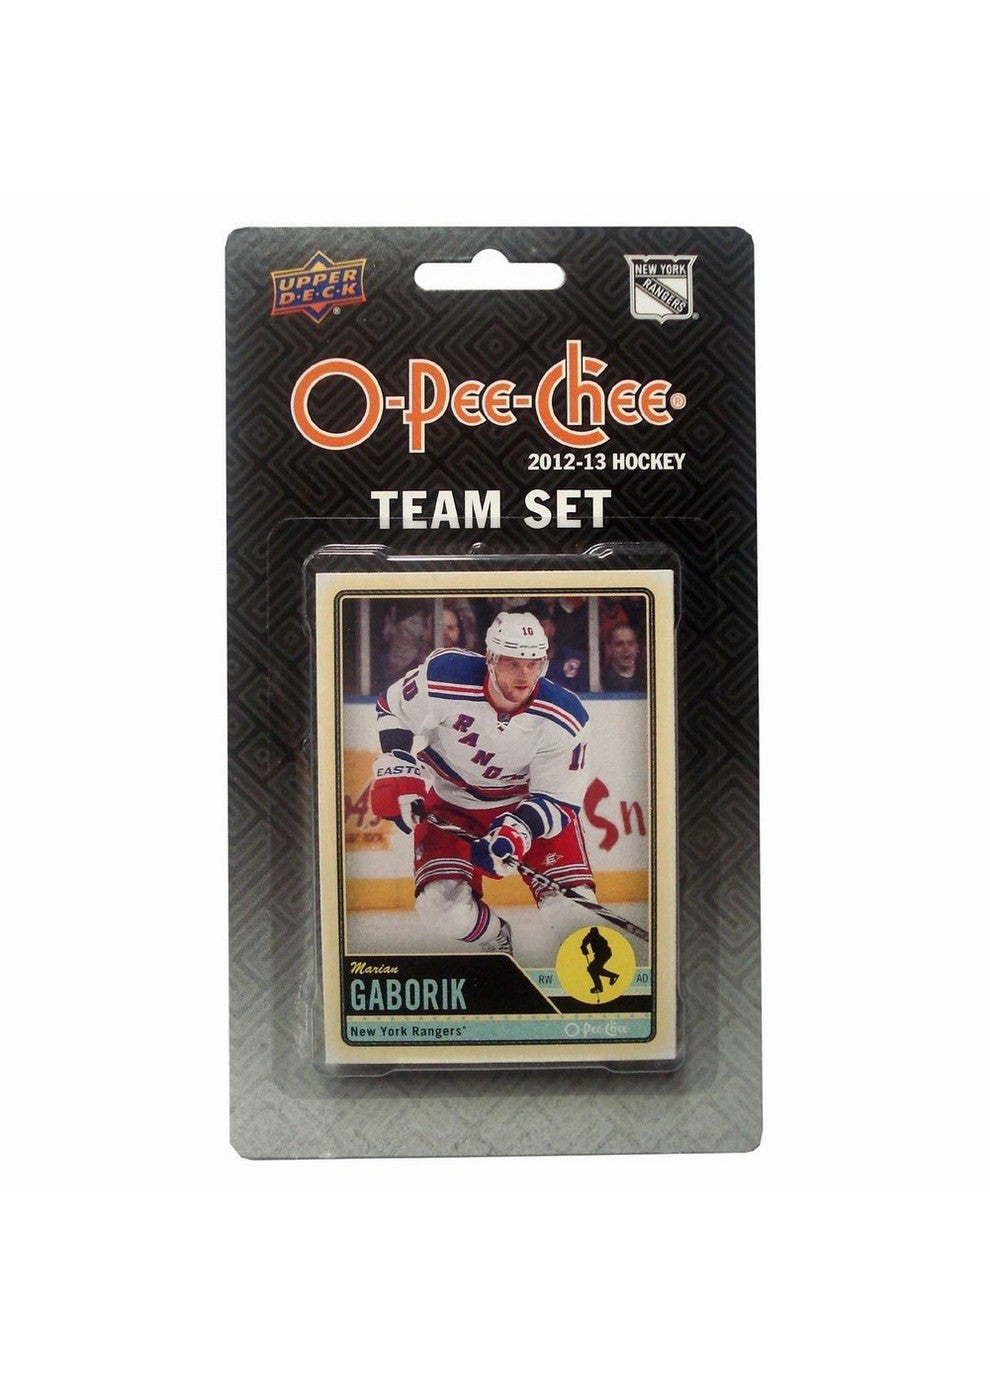 2012/13 Upper Deck O-pee-chee Team Card Set (17 Cards) - New York Rangers